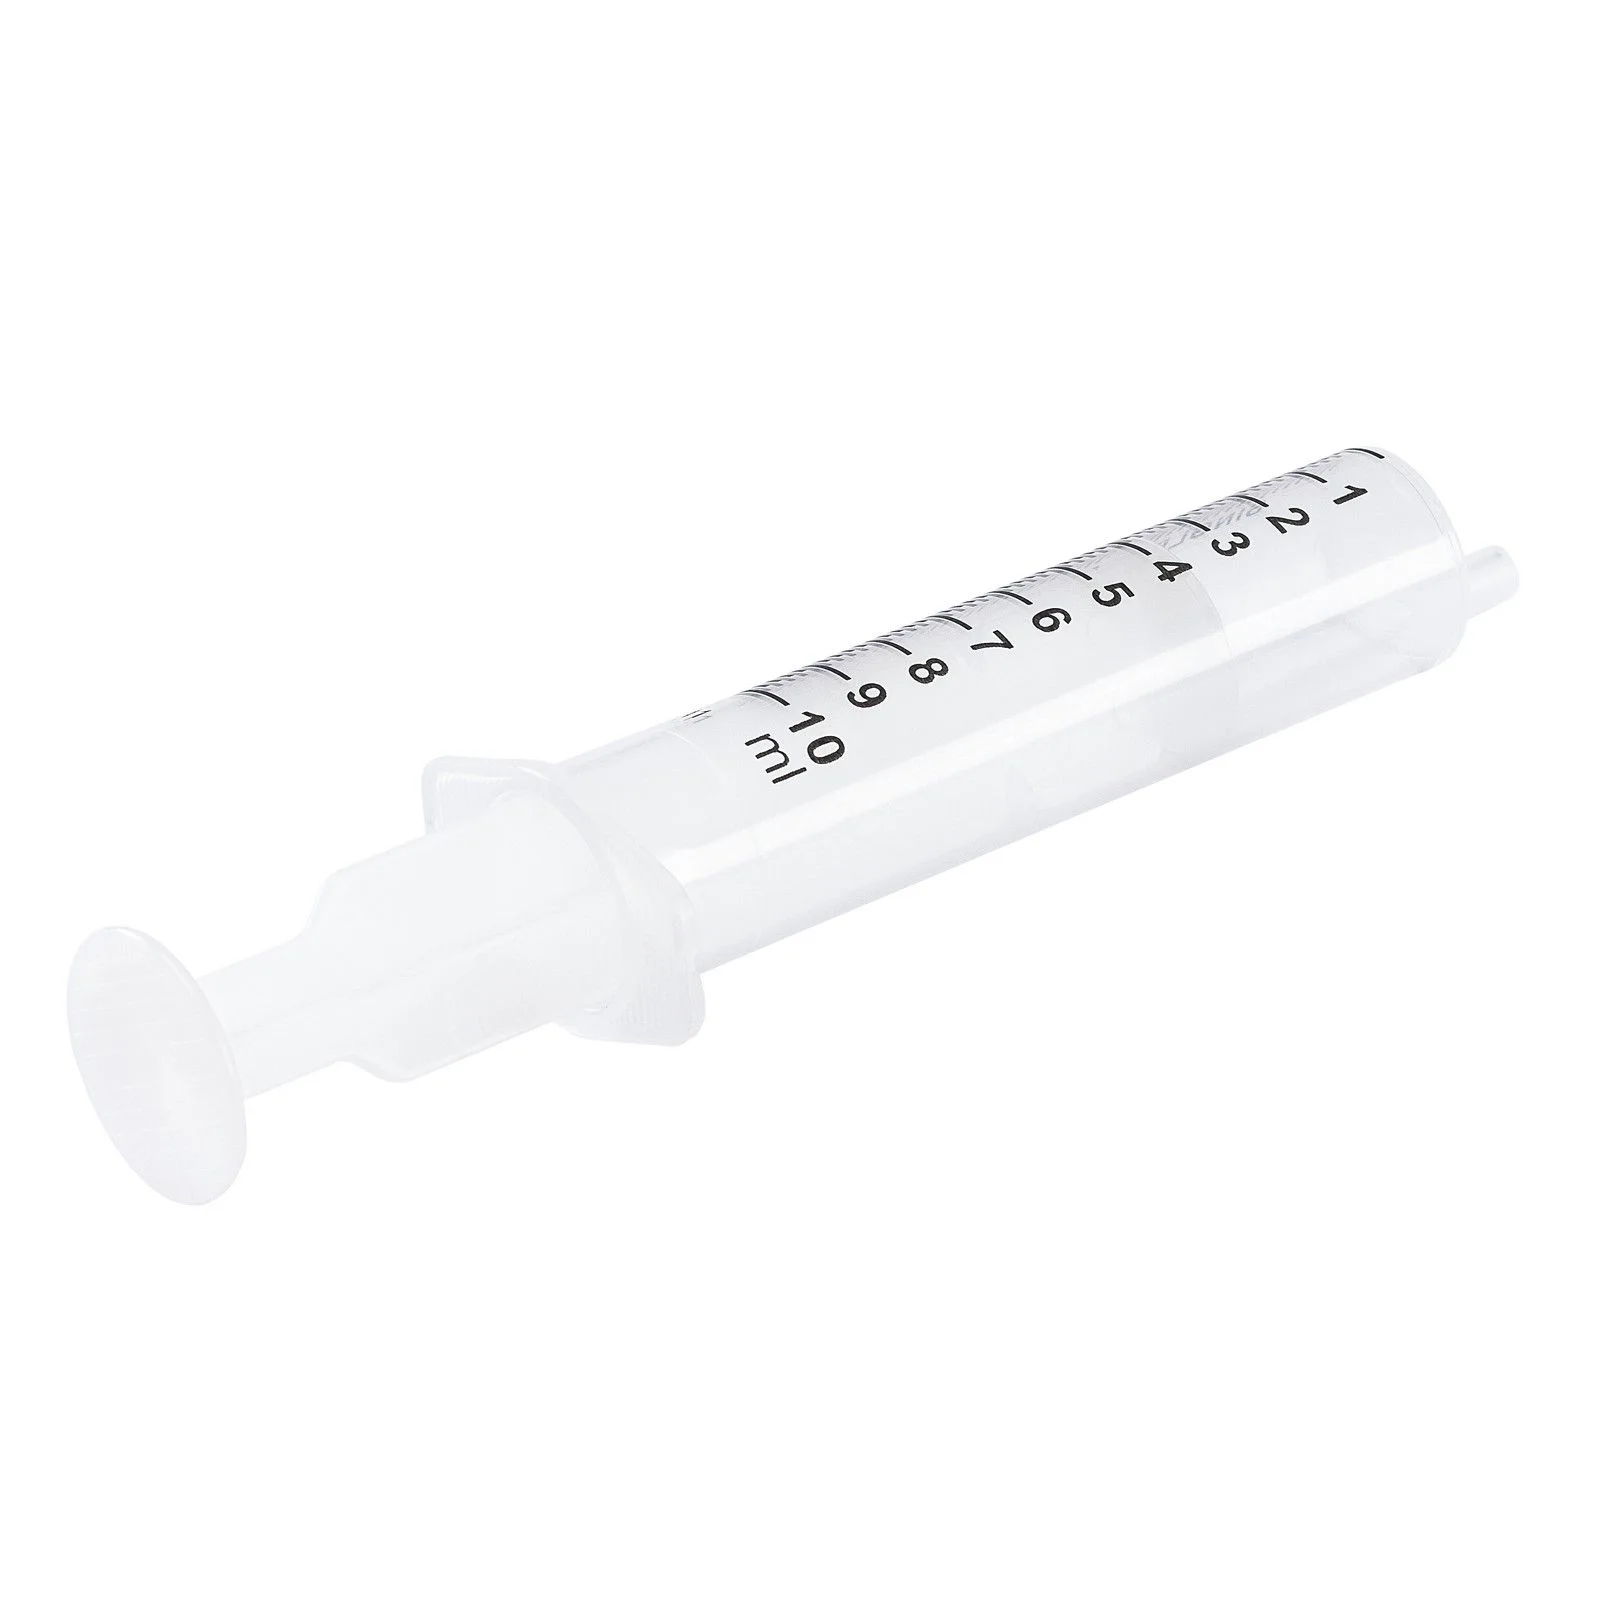 31104 Vaessen Creative • Measuring syringe 10ml limsprøjte opfyldning til lim